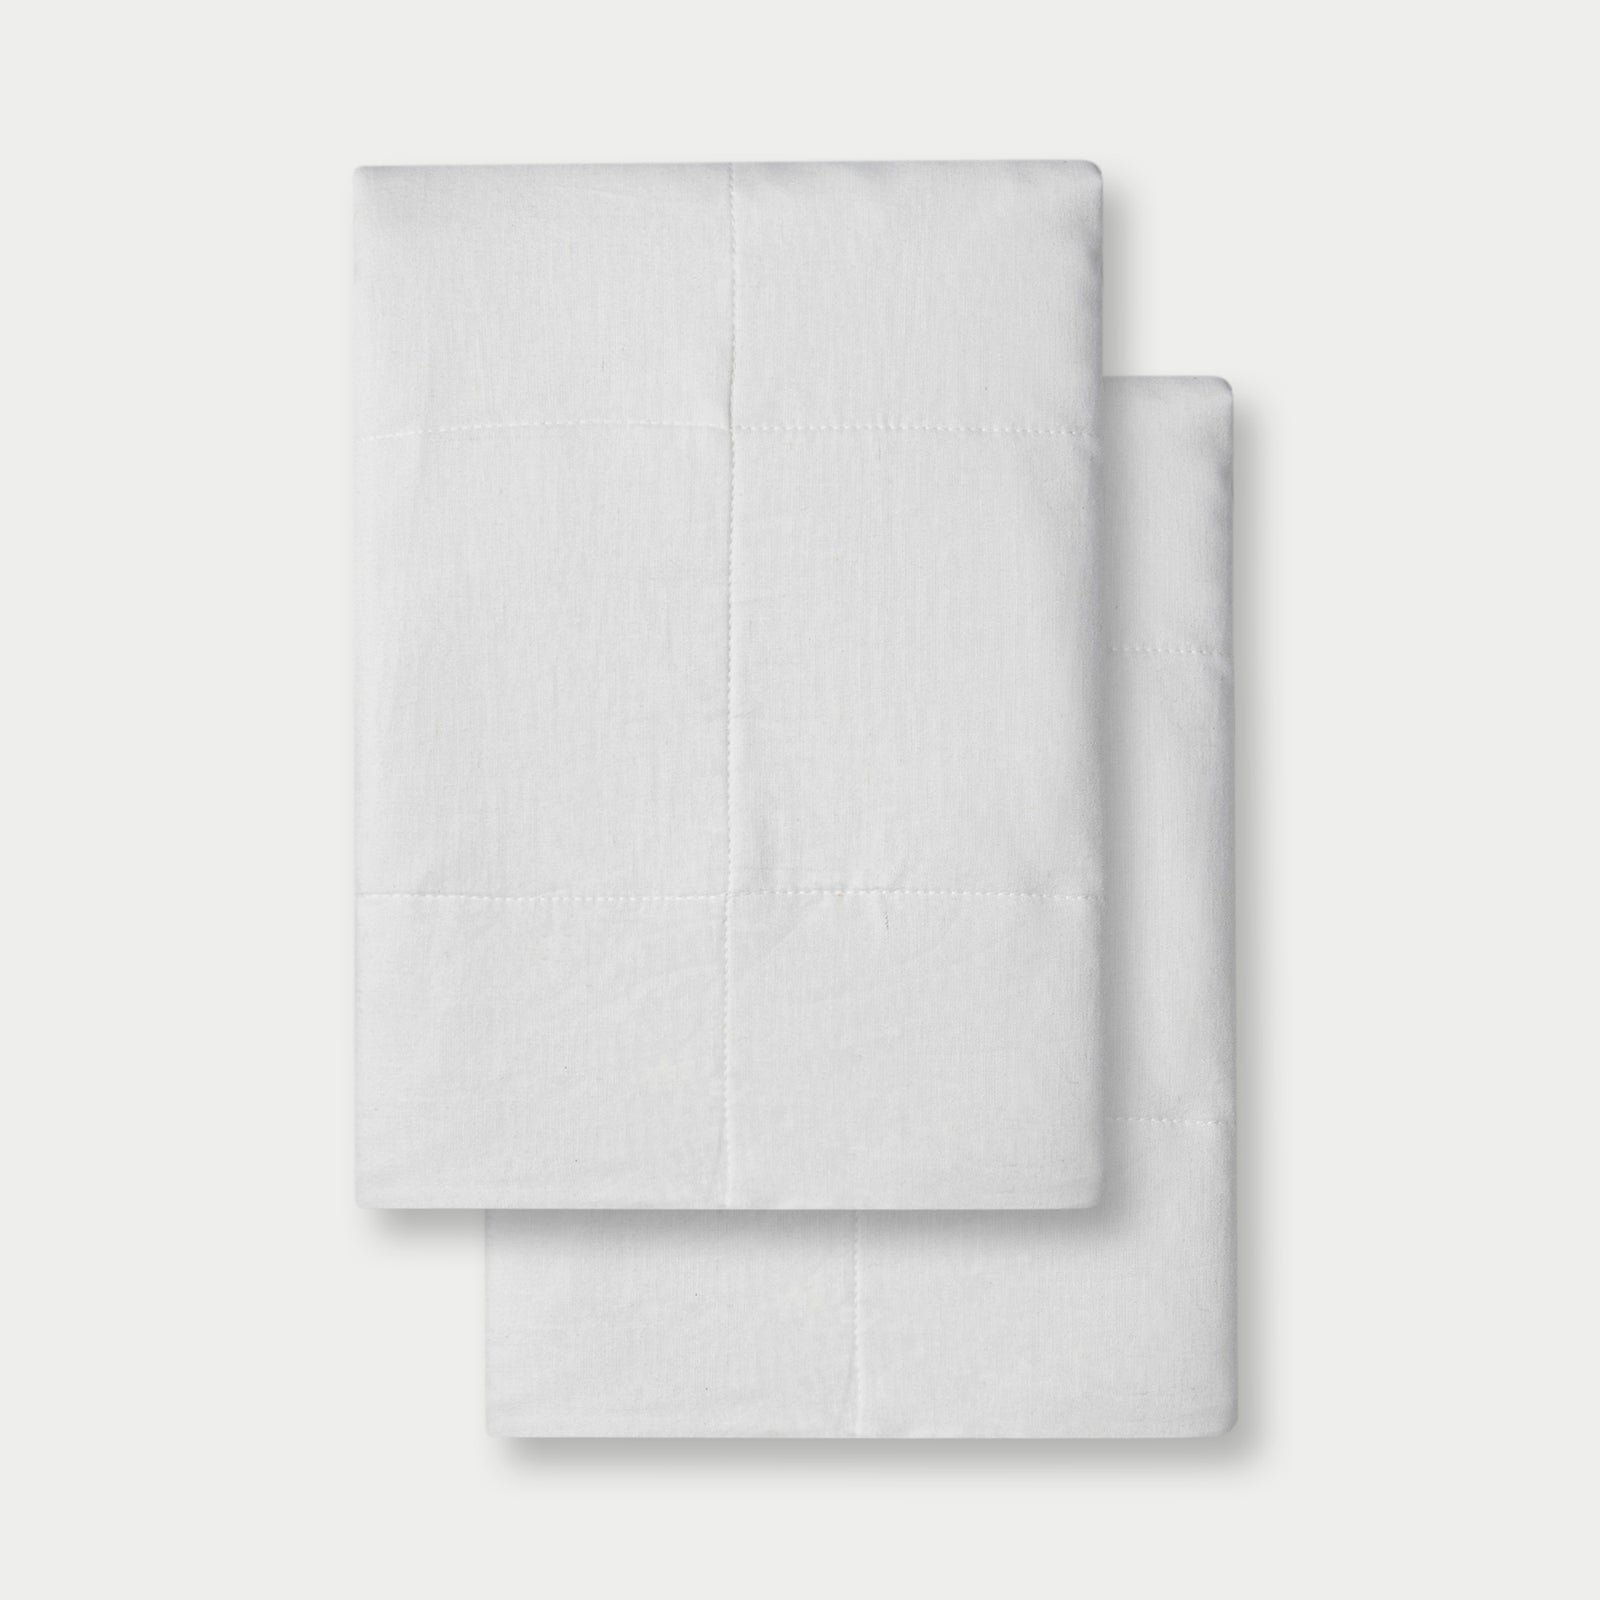 White Linen Box Quilt Sham neatly folded over white background. 